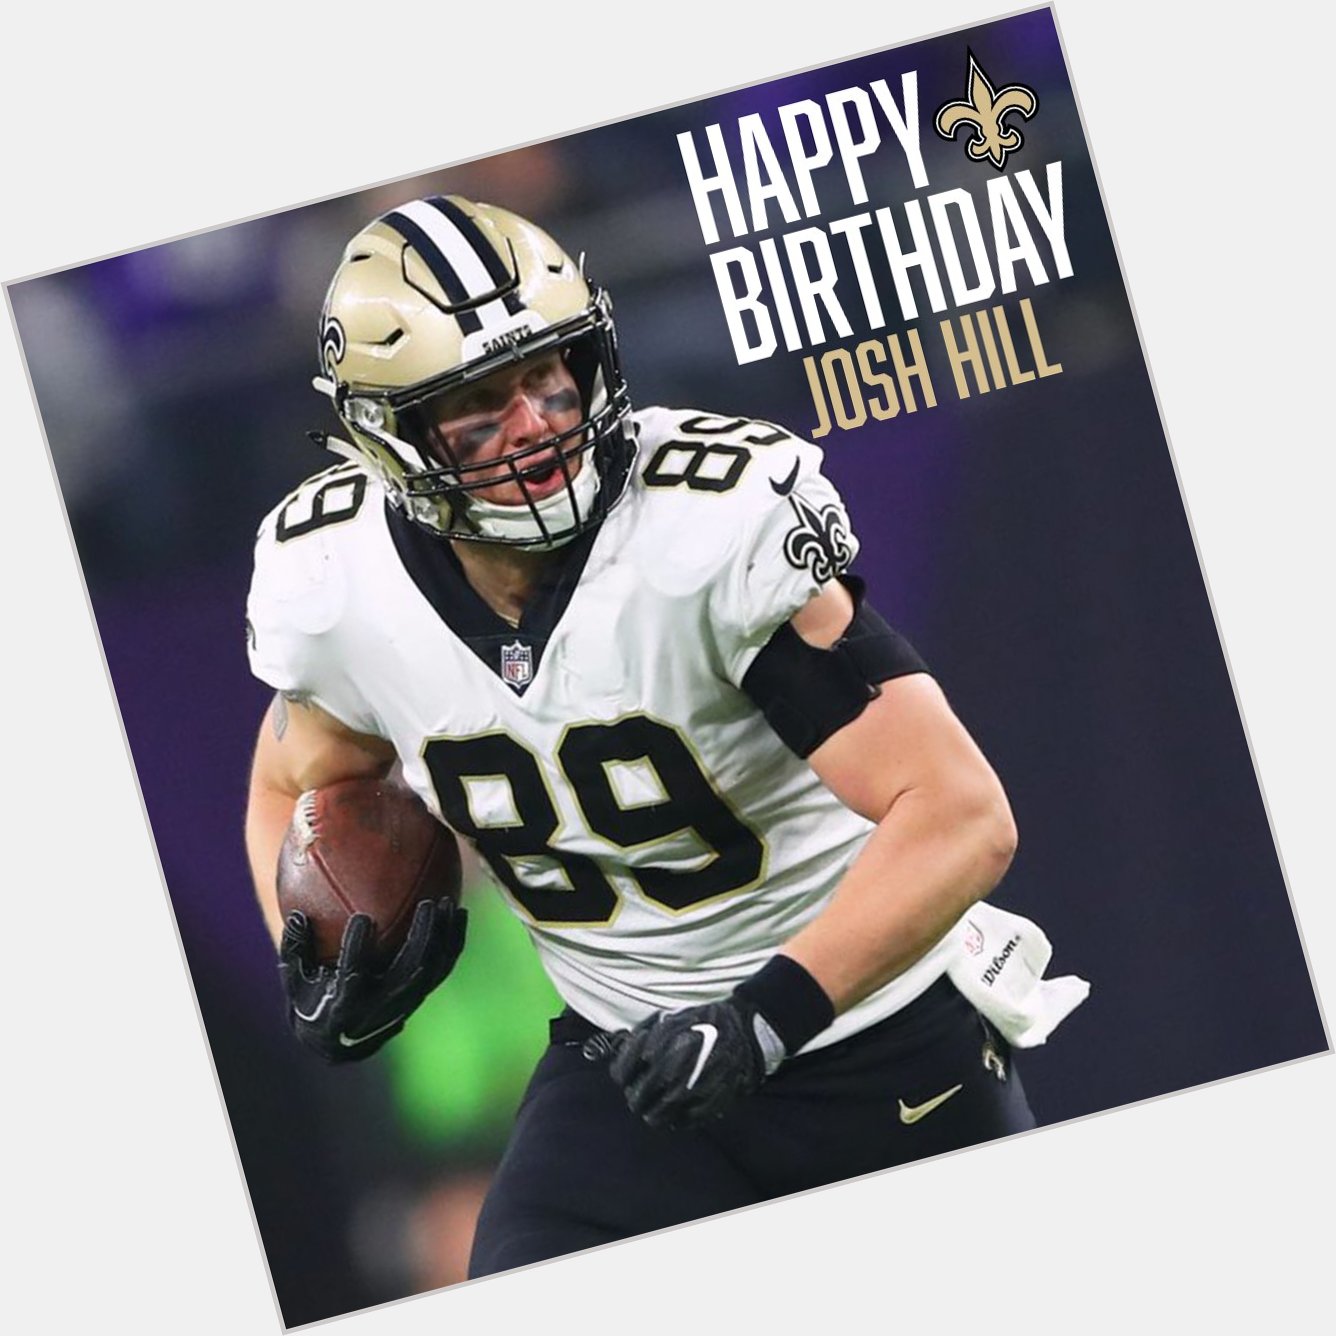 Wishing Josh Hill a VERY Happy Birthday! 